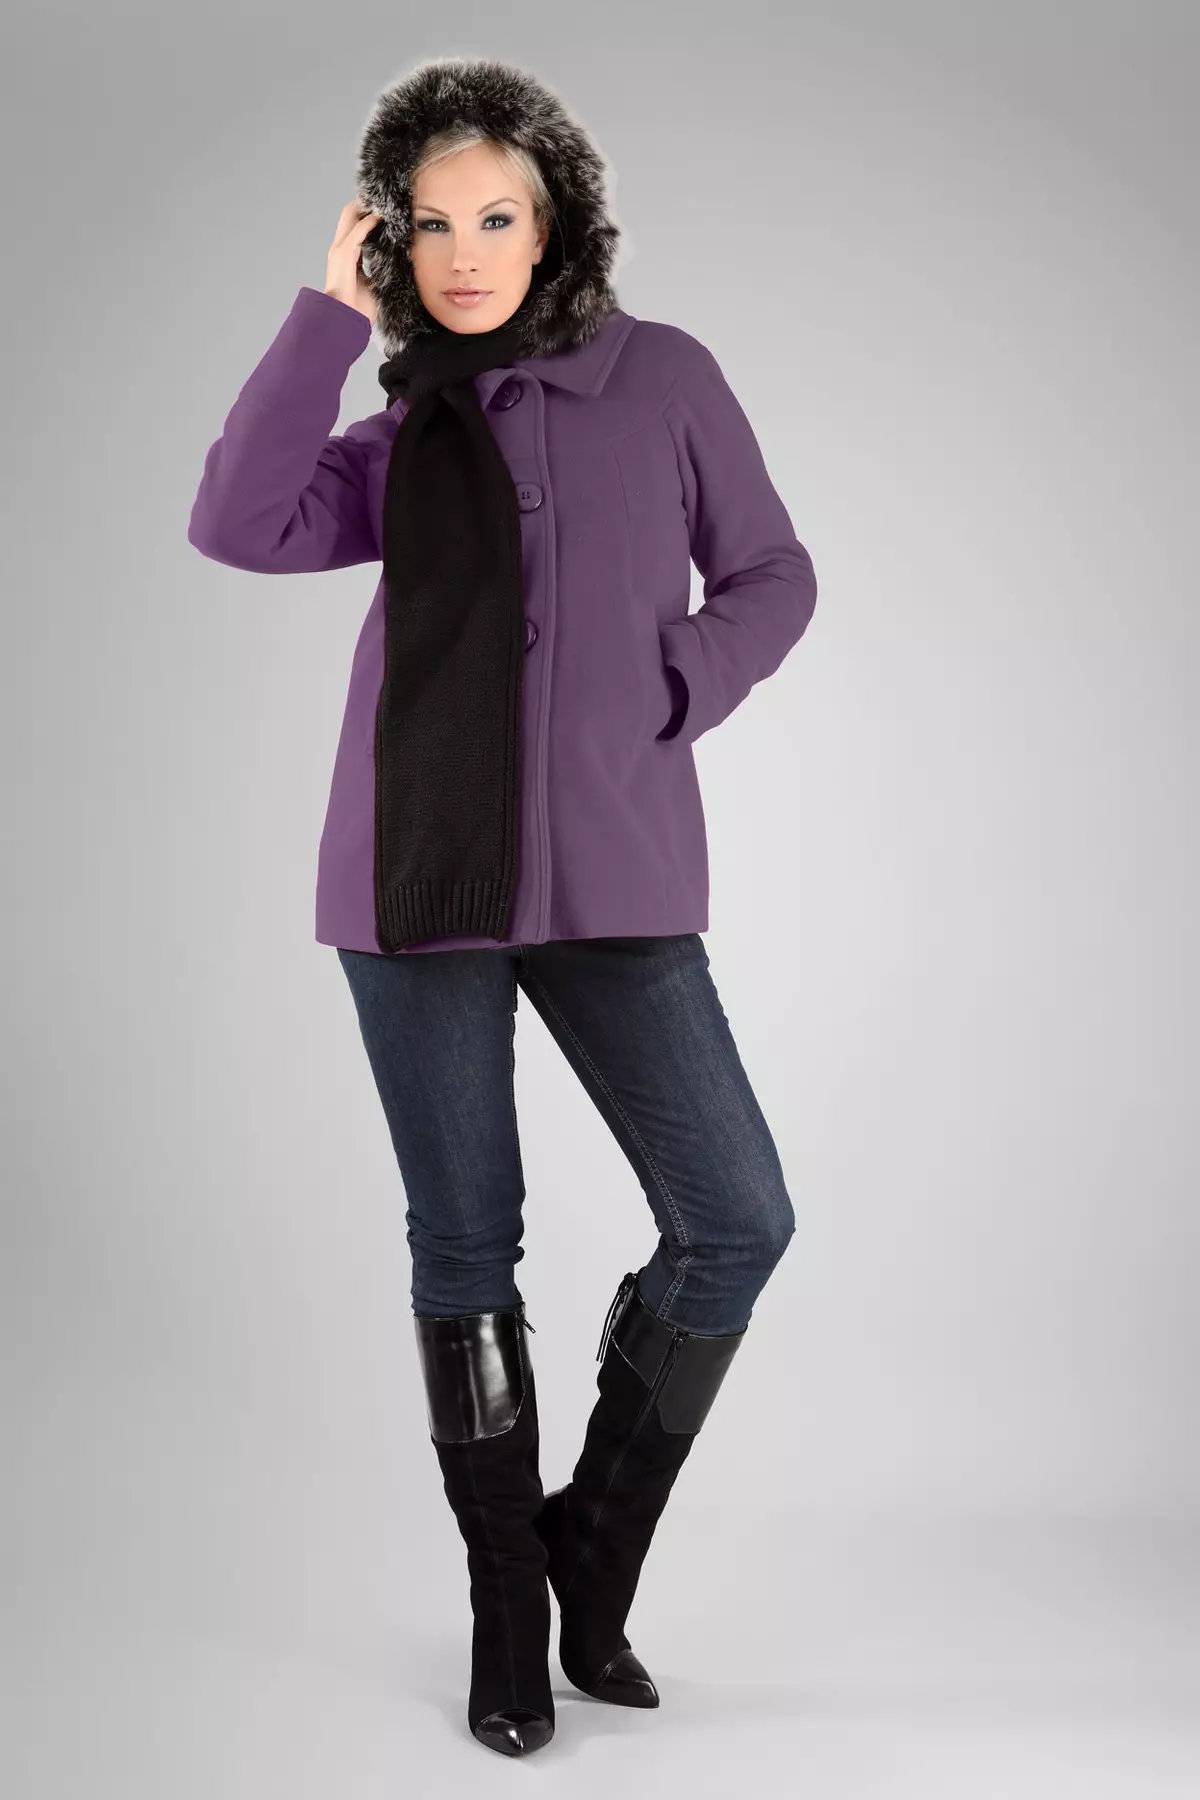 Kot ungu (31 gambar): kot wanita yang bergaya warna ungu gelap, apa beg dan aksesori lain yang sesuai 494_24